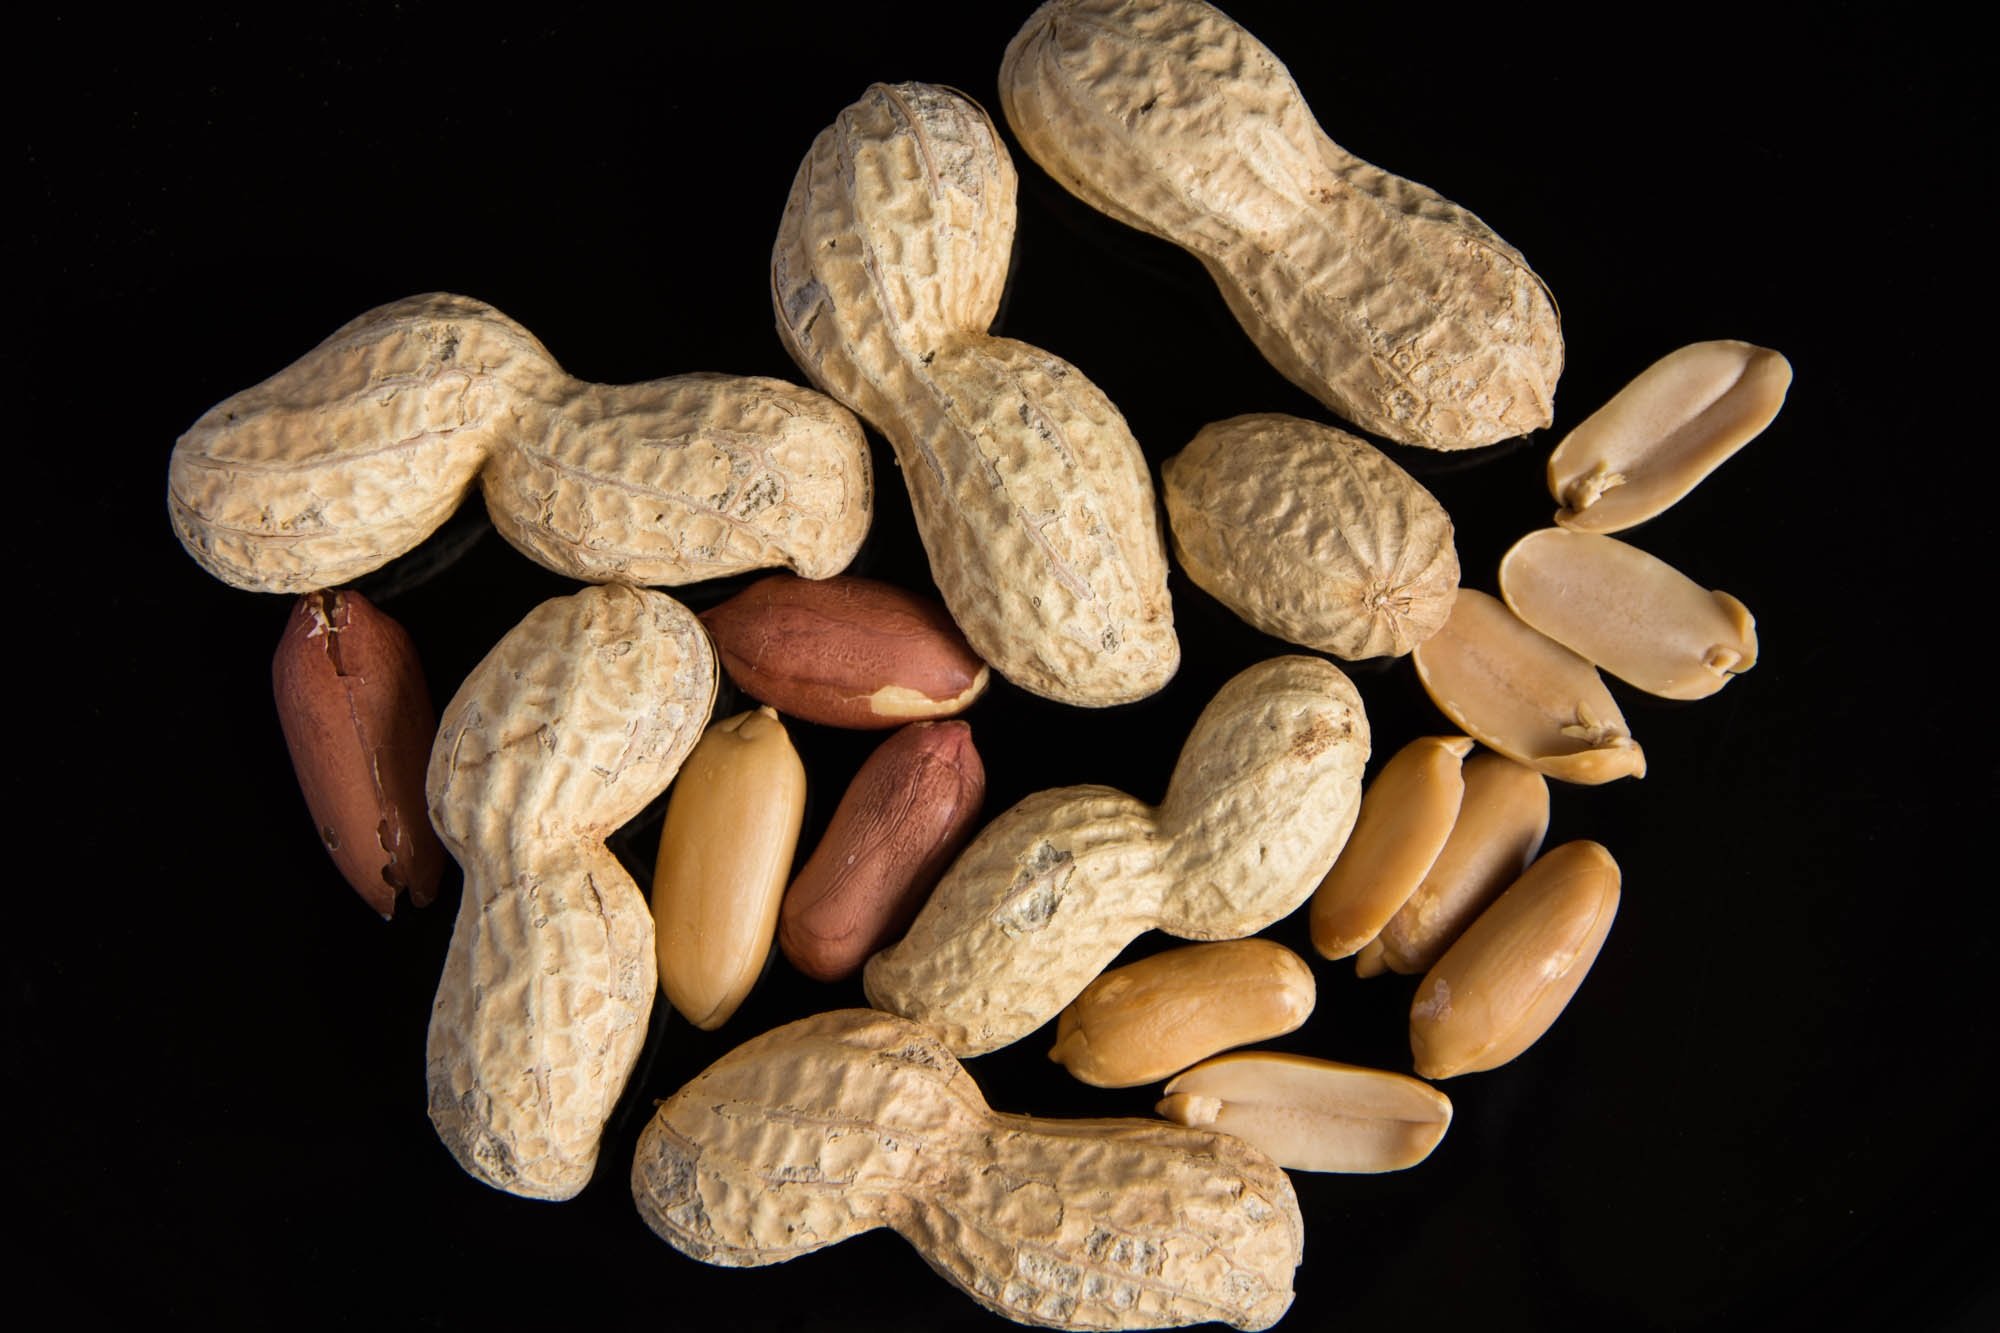 Nuts арахис. Земляной арахис. Земляной орех арахис. Арахис Peanuts. Арахис культурный Земляной орех.